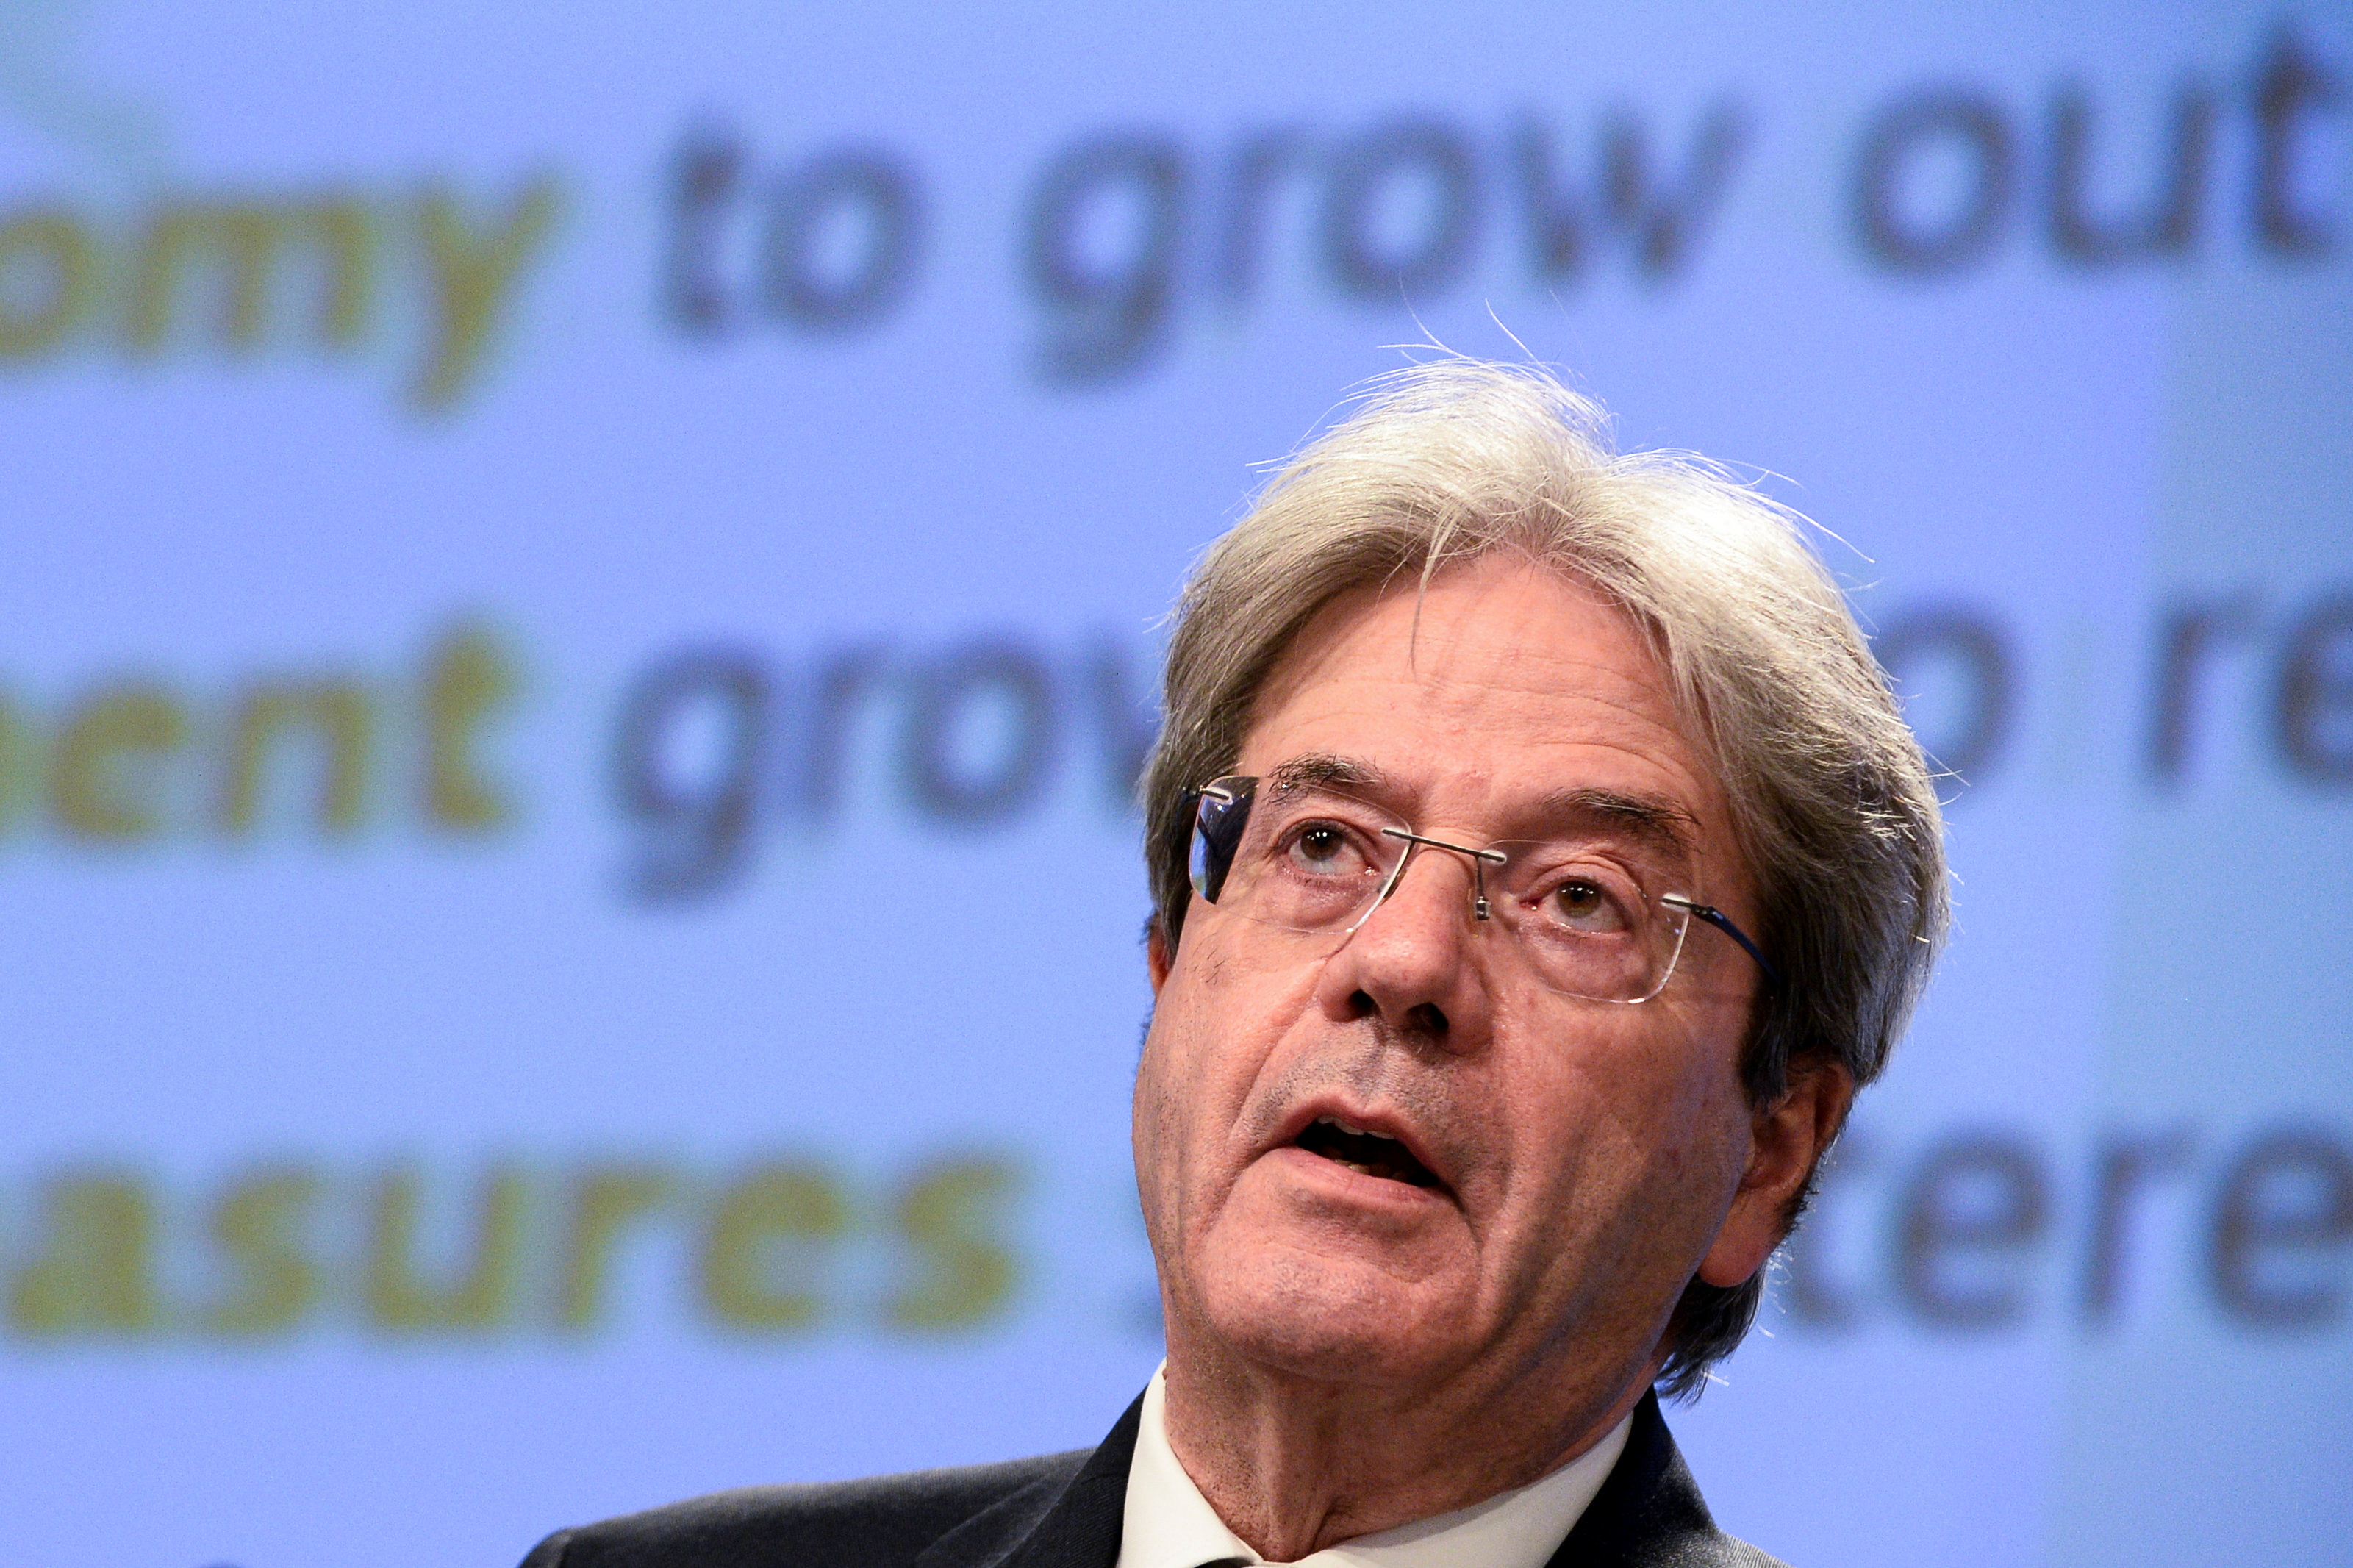 EU Commissioner Gentiloni holds news conference in Brussels